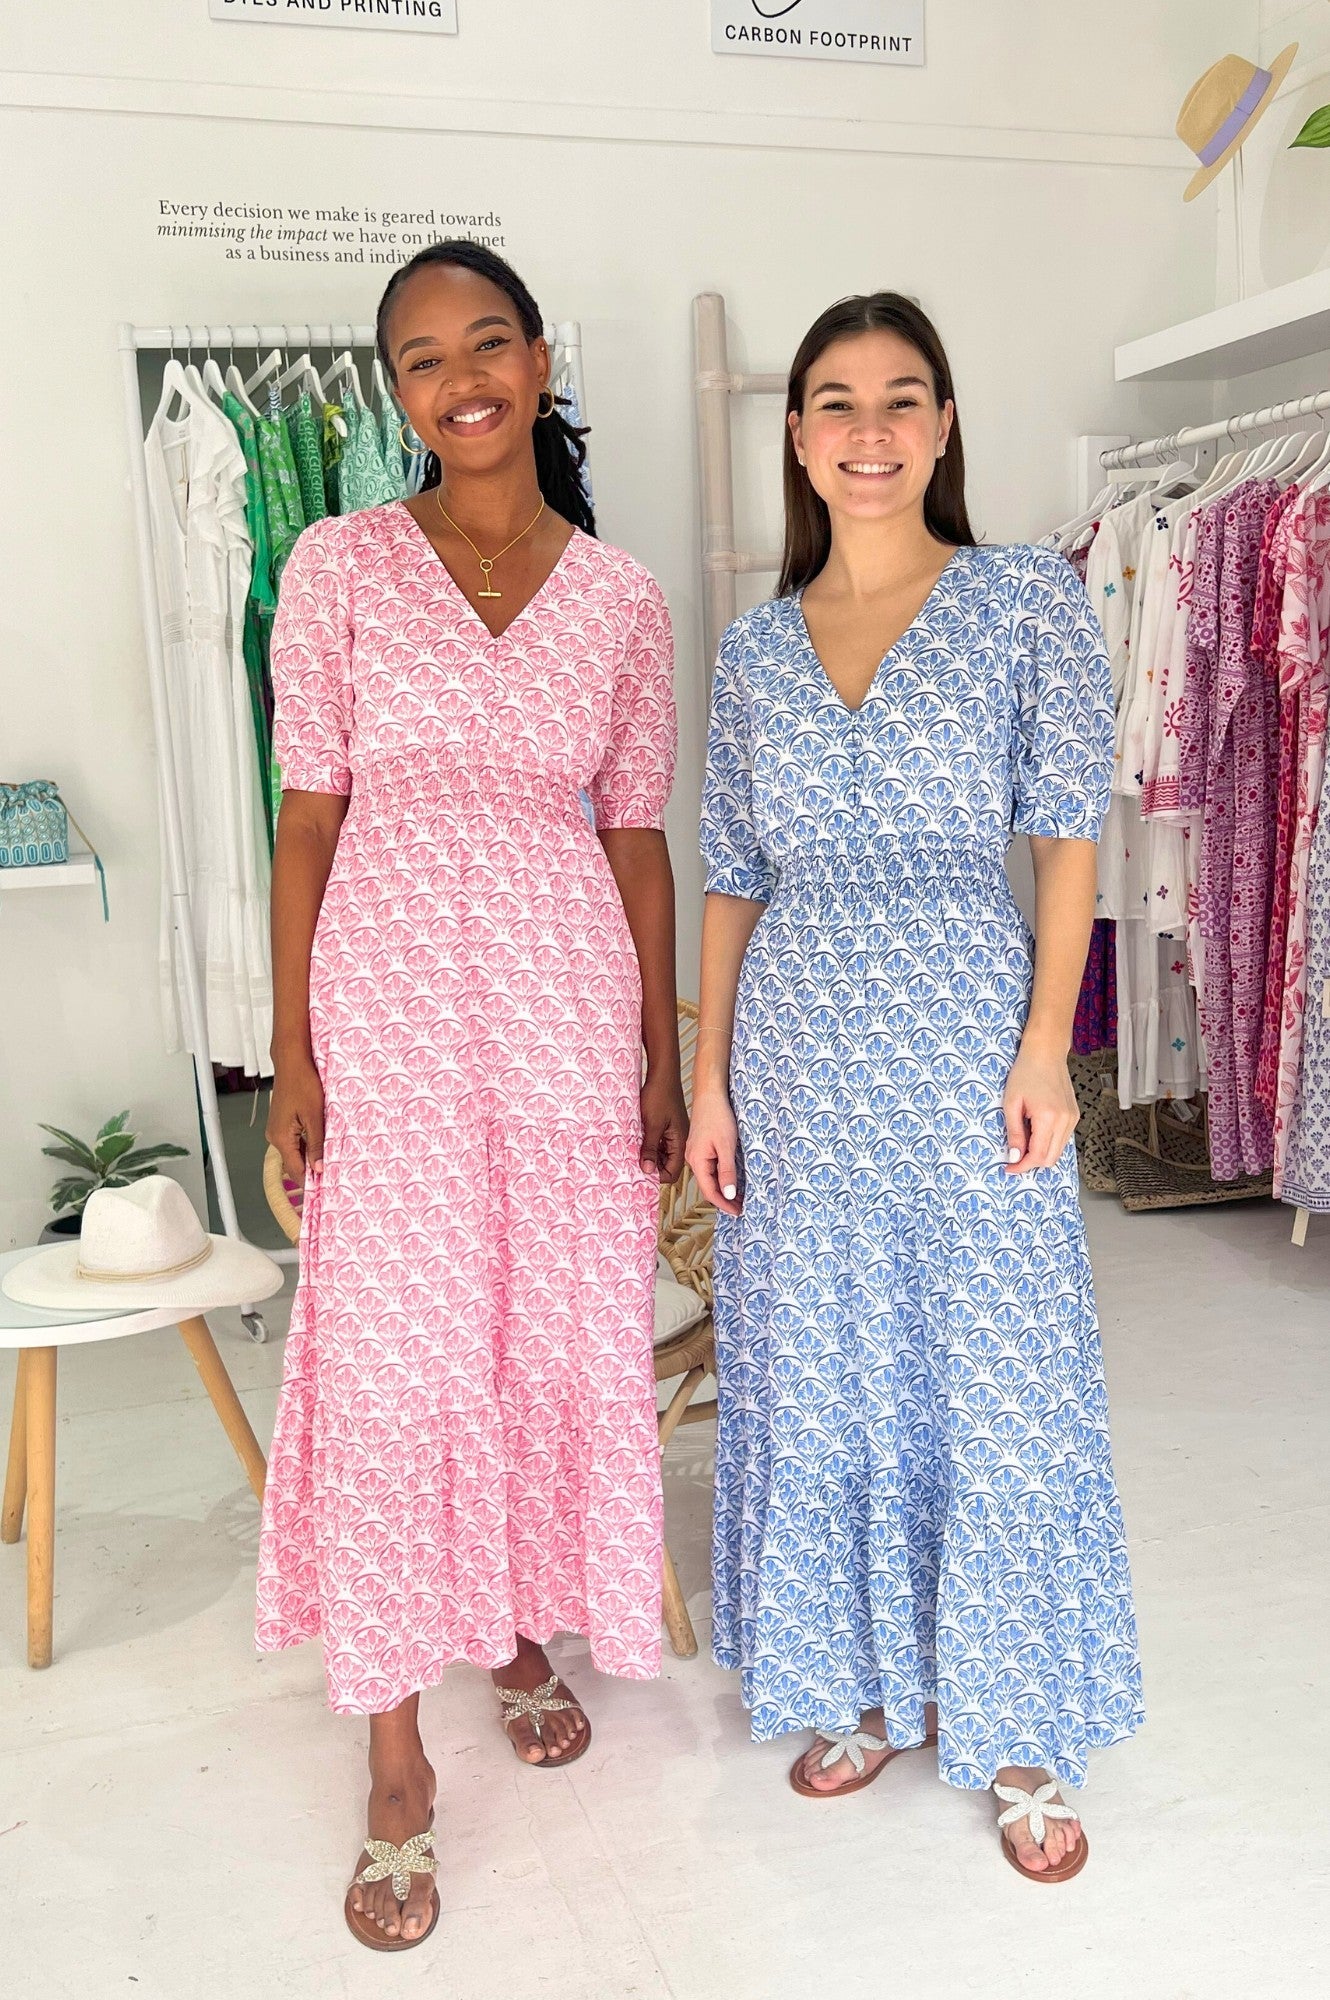 Billie Short Sleeve Dress | Clover White/Pink